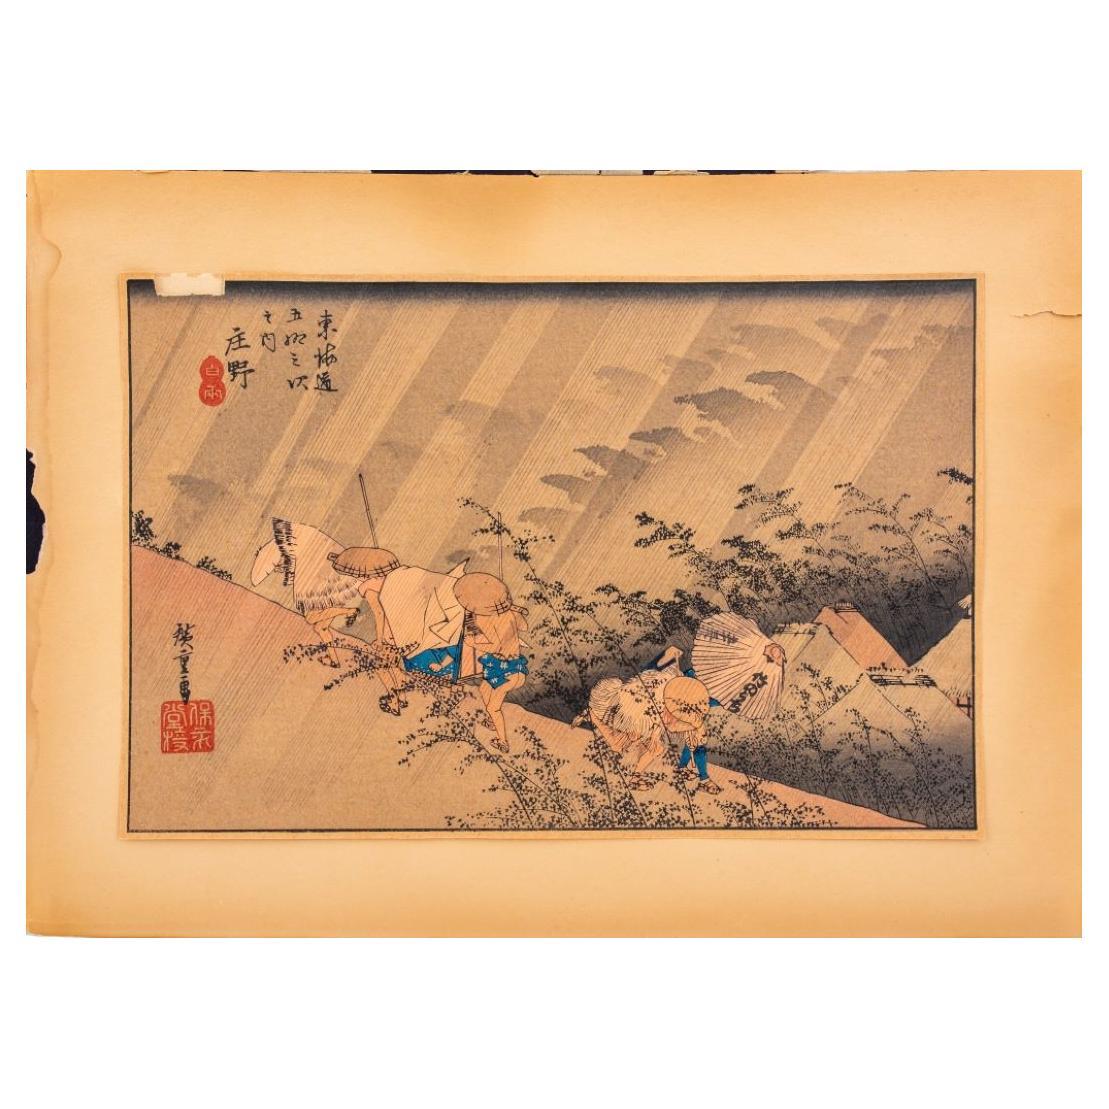 Utagawa Hiroshige "Shono Driving Rain" Woodcut For Sale